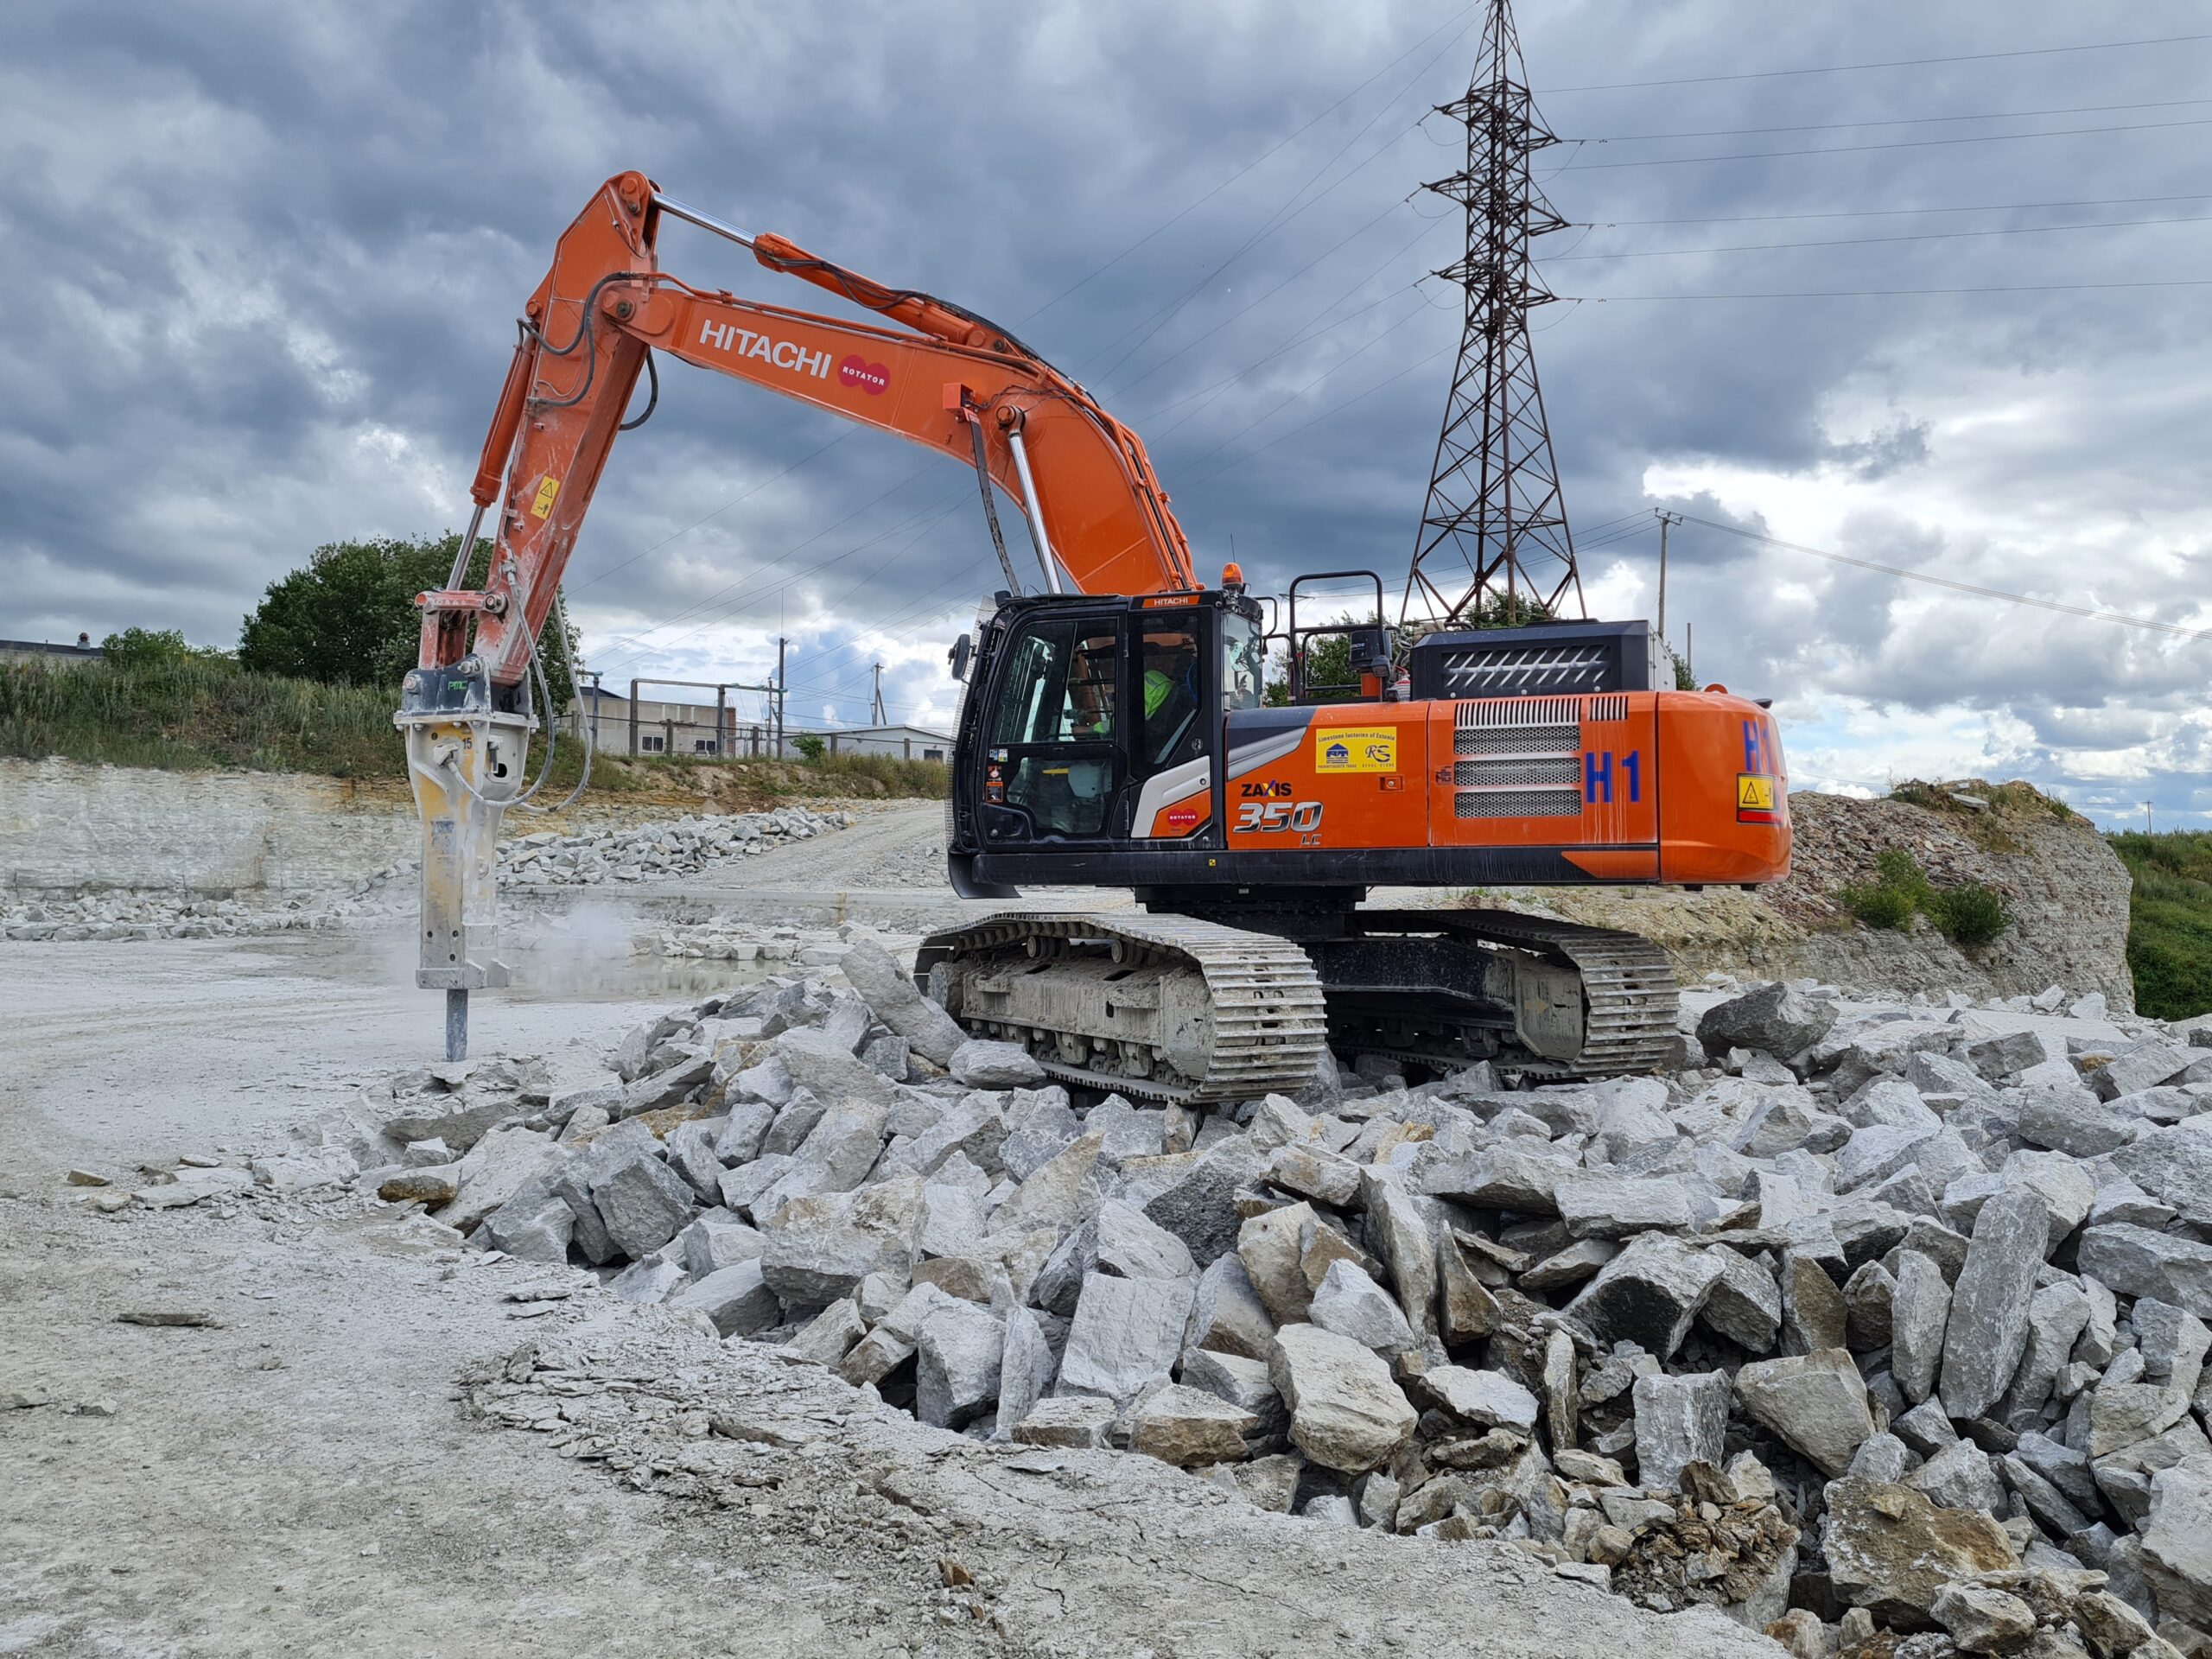 Limestone Factories of Estonia has bought Hitachi excavator